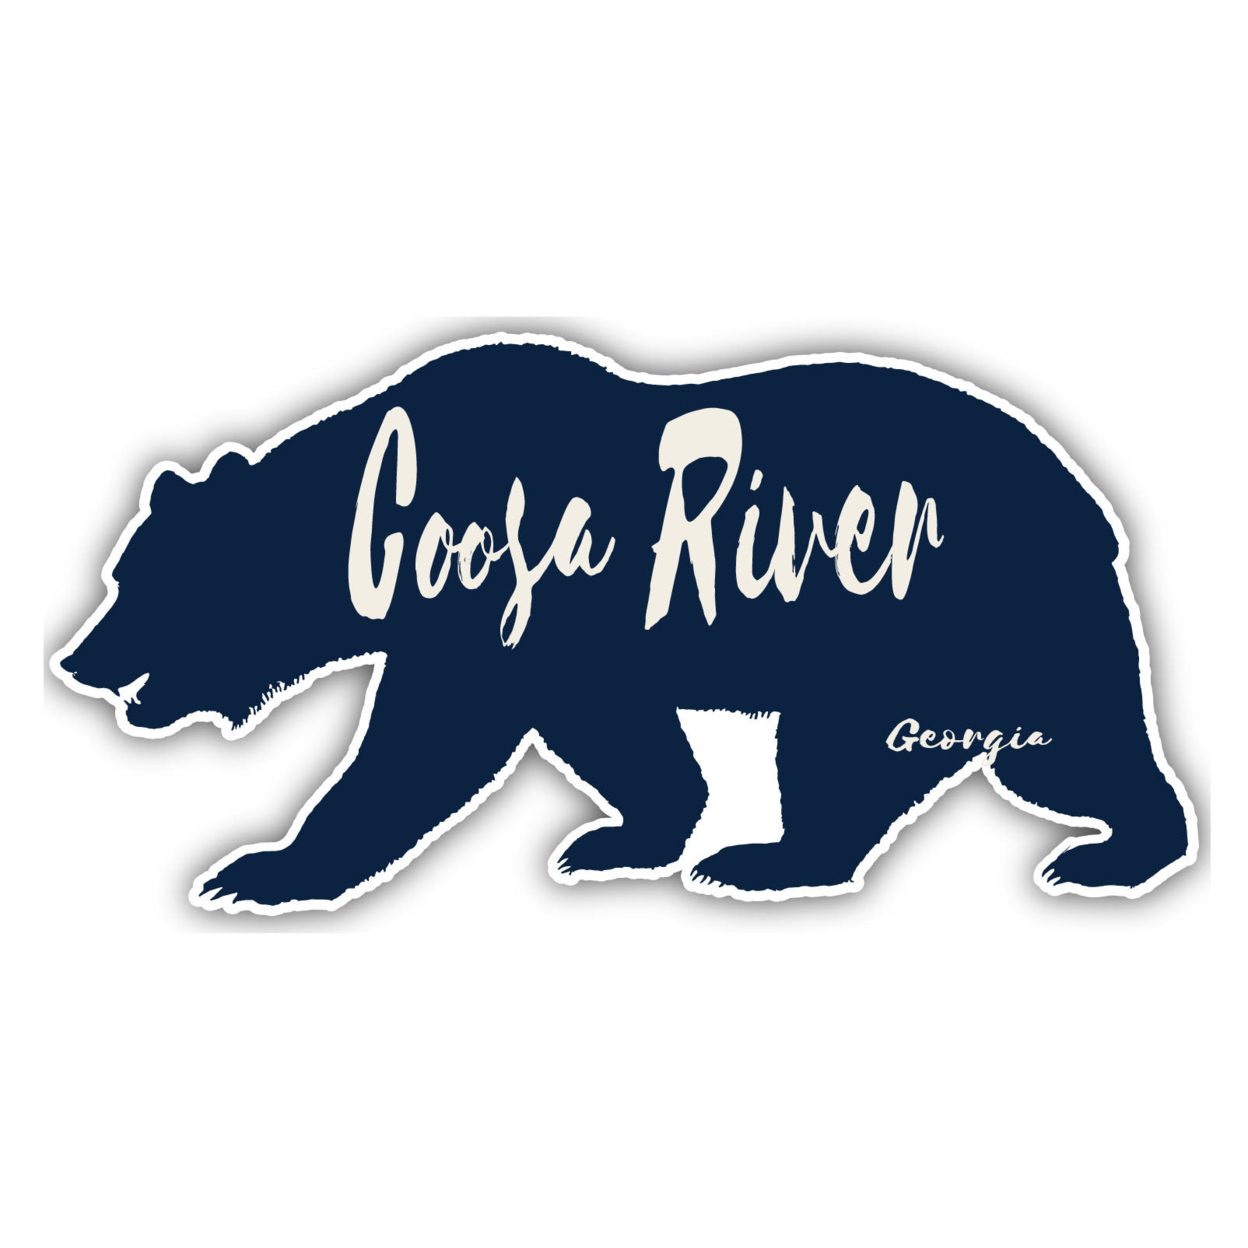 Coosa River Georgia Souvenir Decorative Stickers (Choose Theme And Size) - Single Unit, 8-Inch, Bear